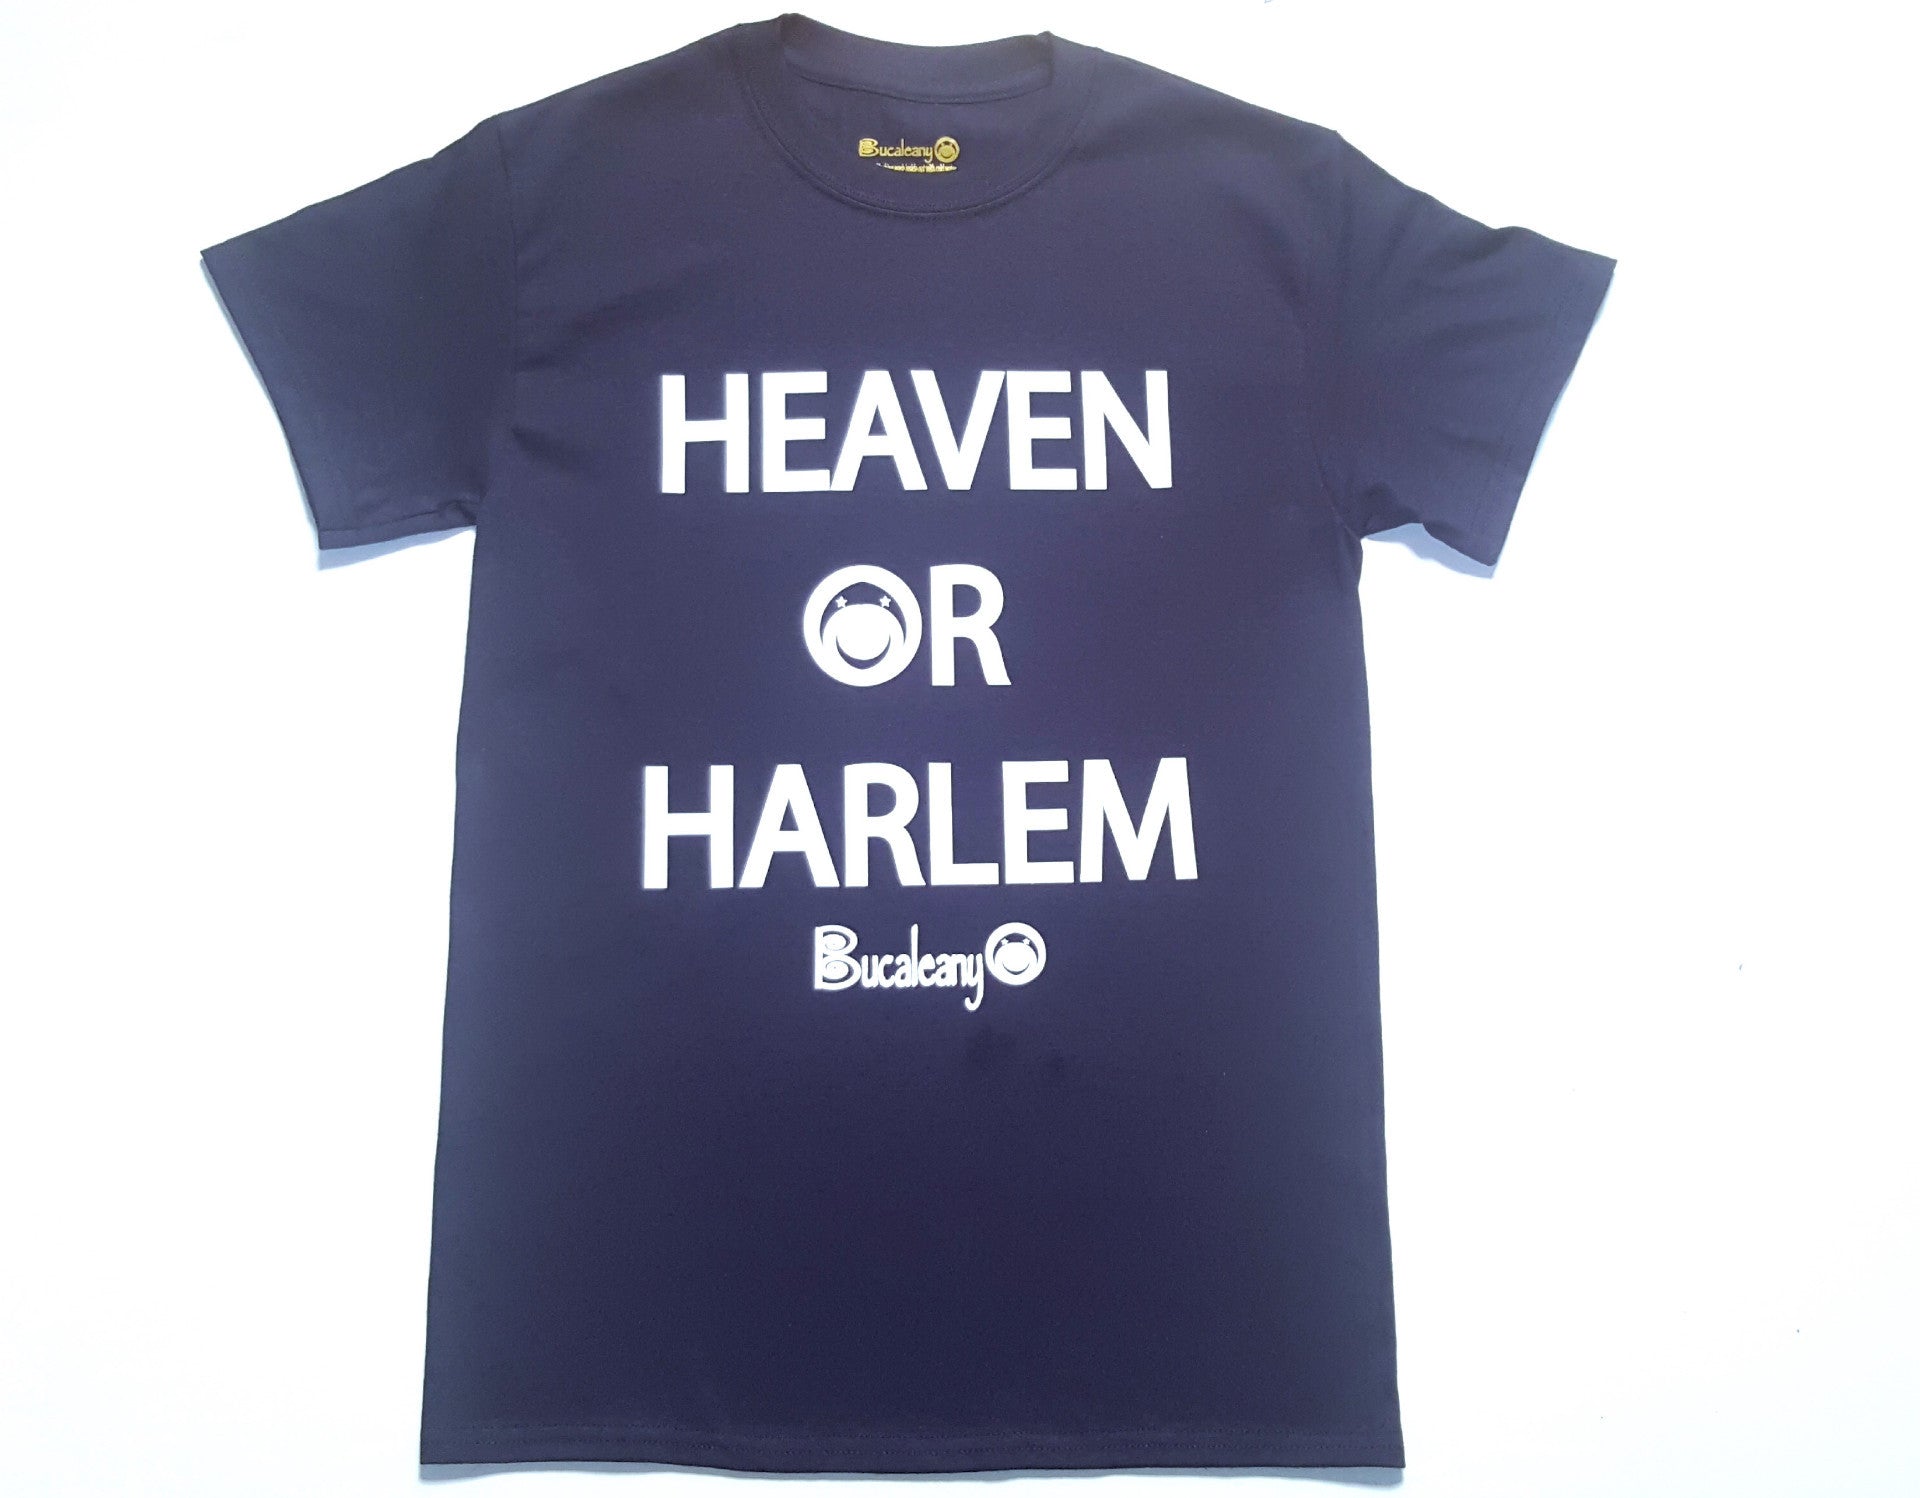 Bucaleany "Heaven Or Harlem" T-shirt - BUCALEANY